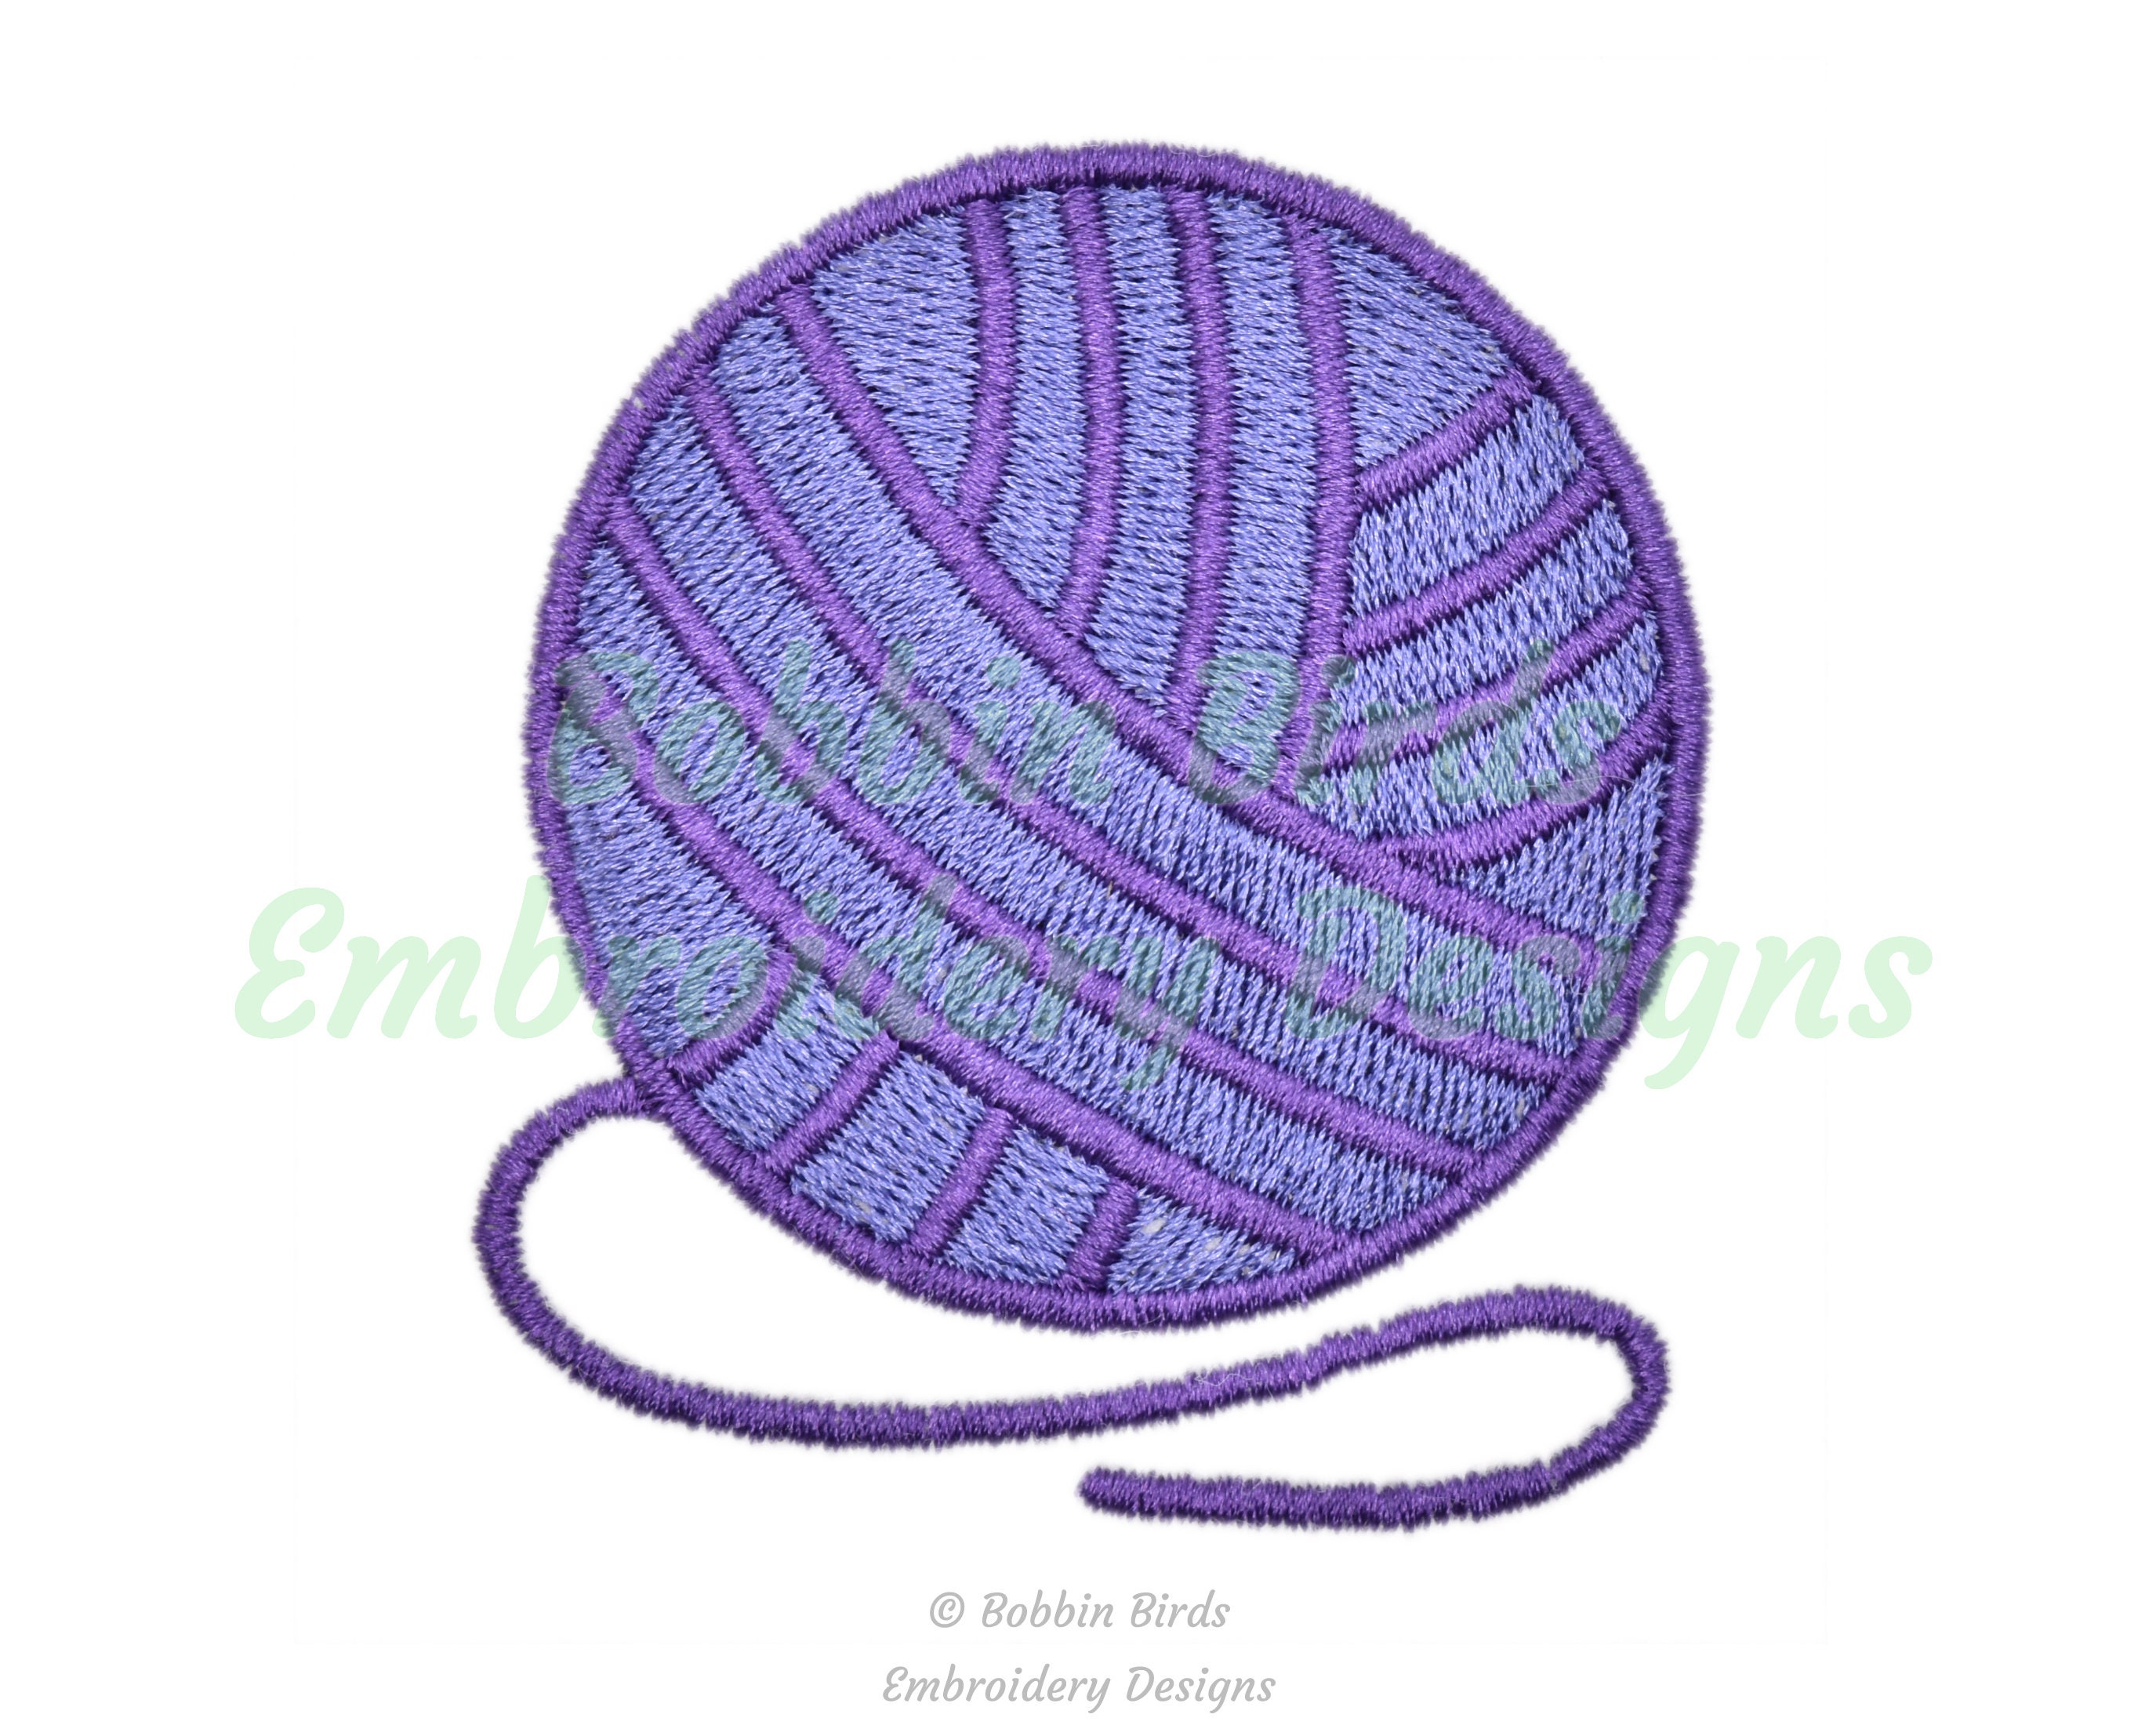 Love to Craft: Yarn - Machine Embroidery Design